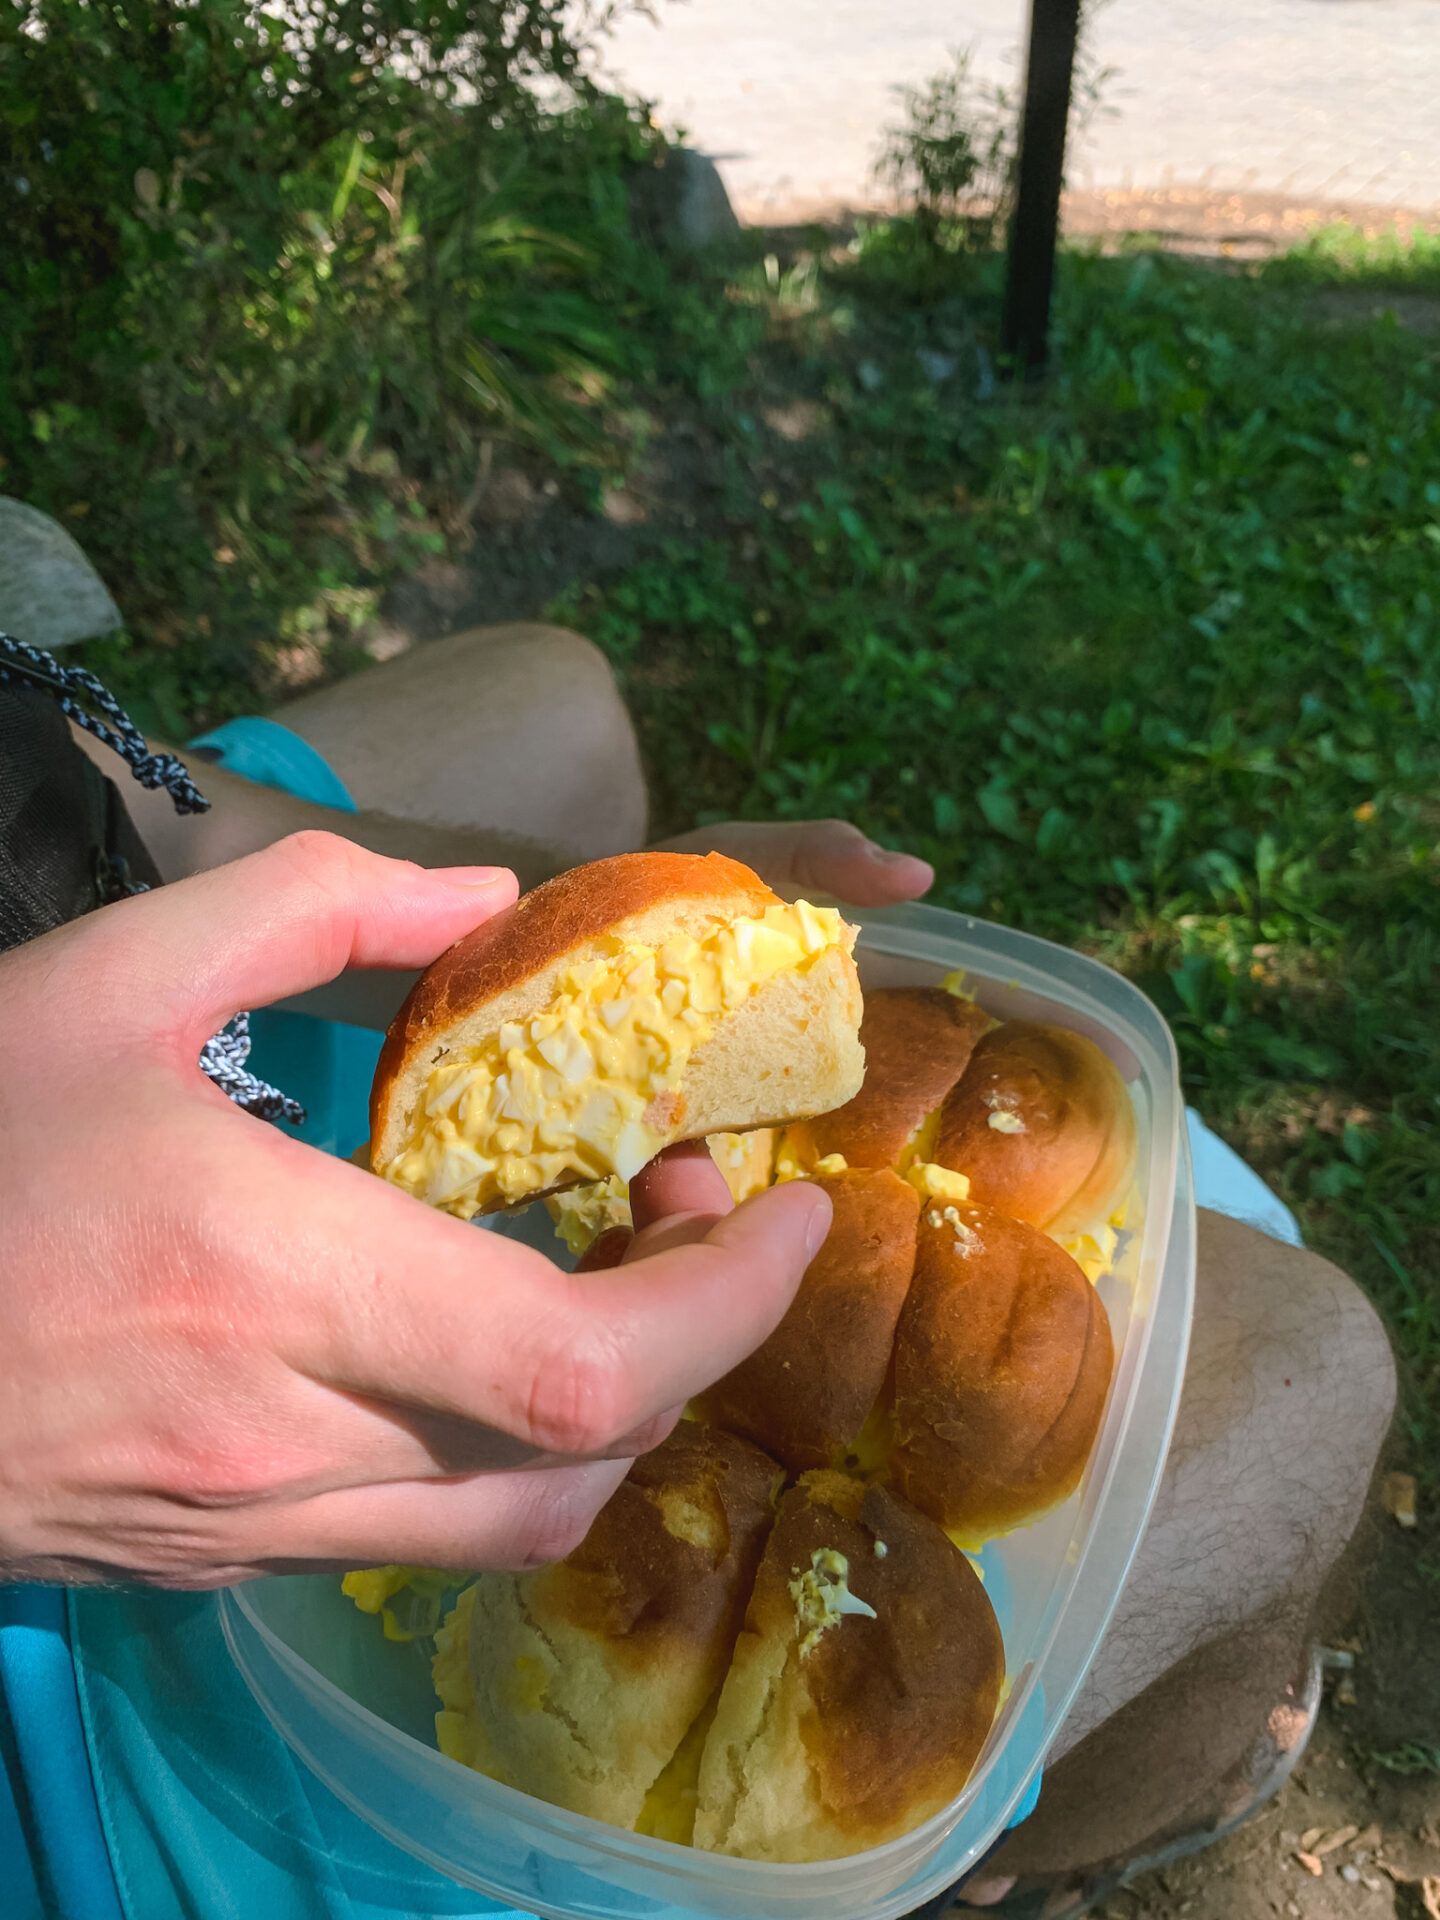 Japanese egg sandos for a picnic at the Toronto Islands